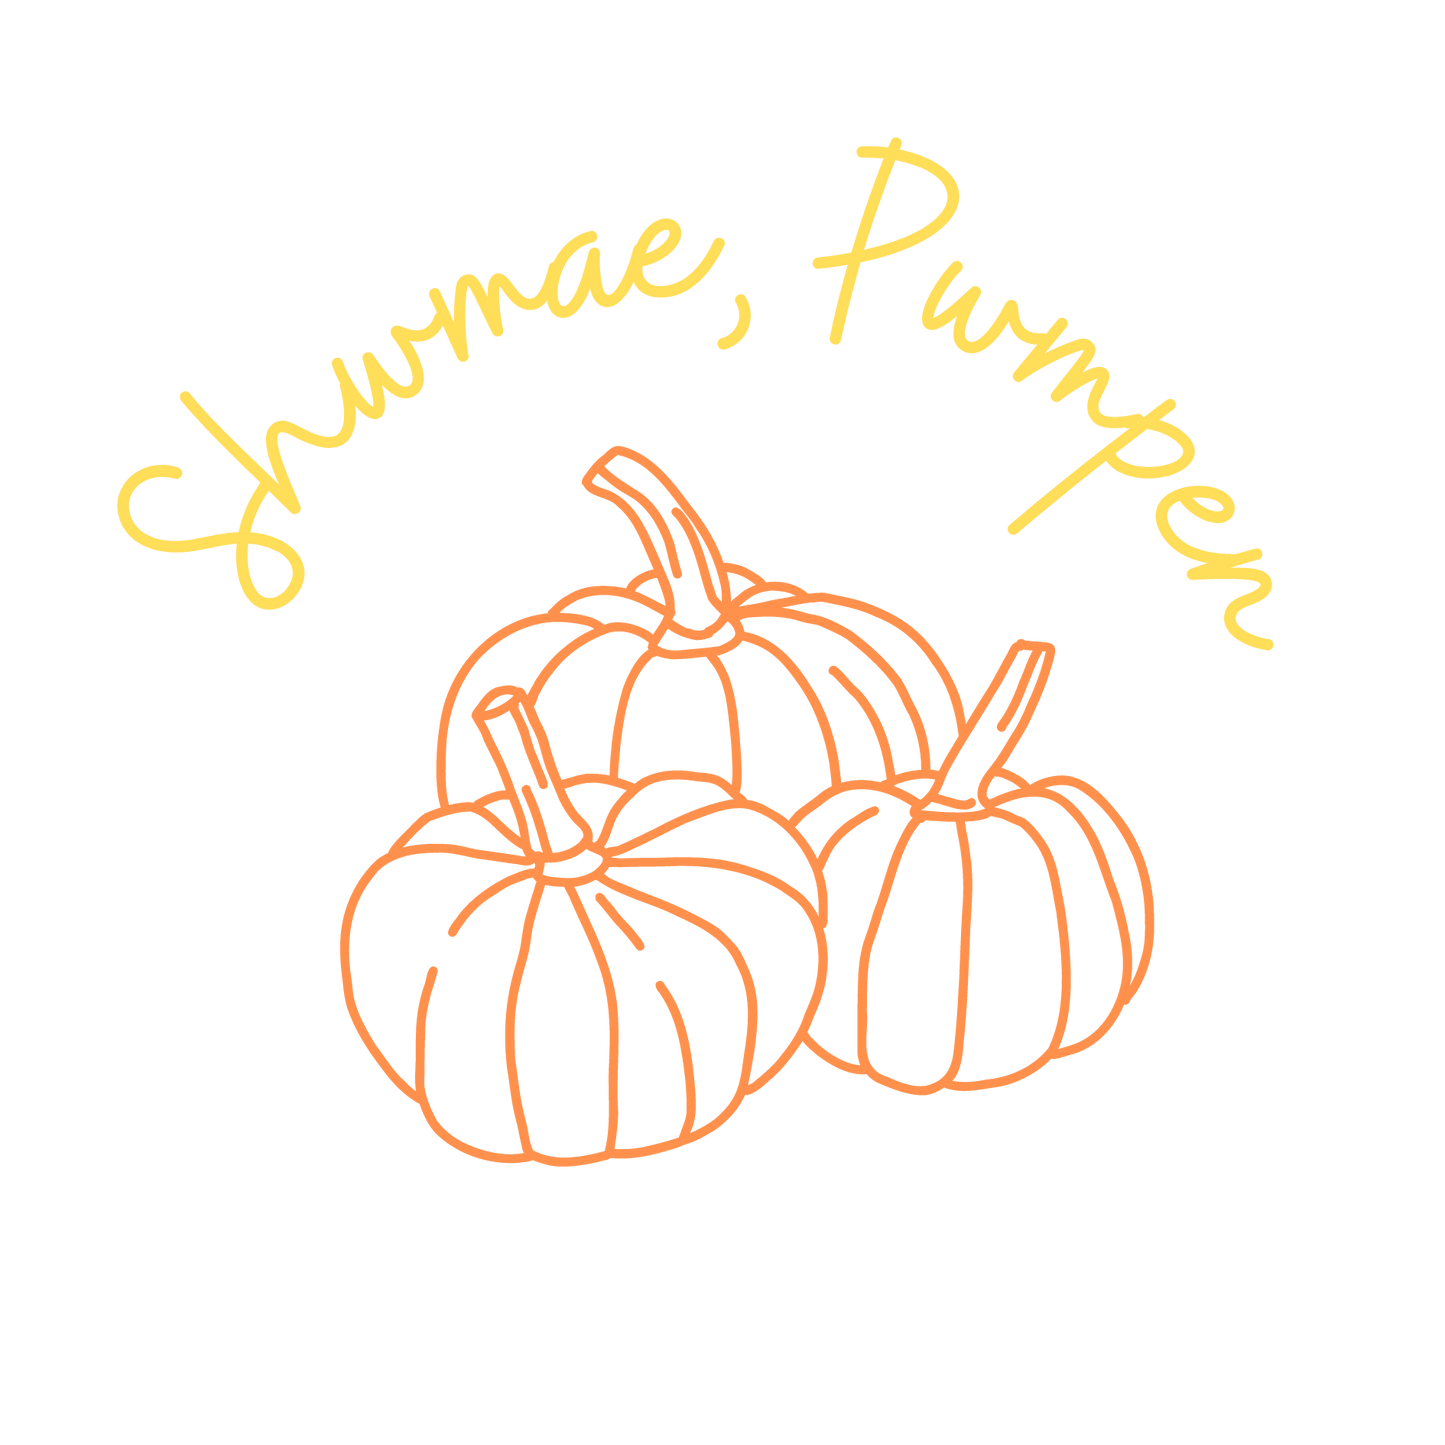 Shwmae, Pwmpen (What's up, Pumpkin) autumn sweatshirt- deep heather grey